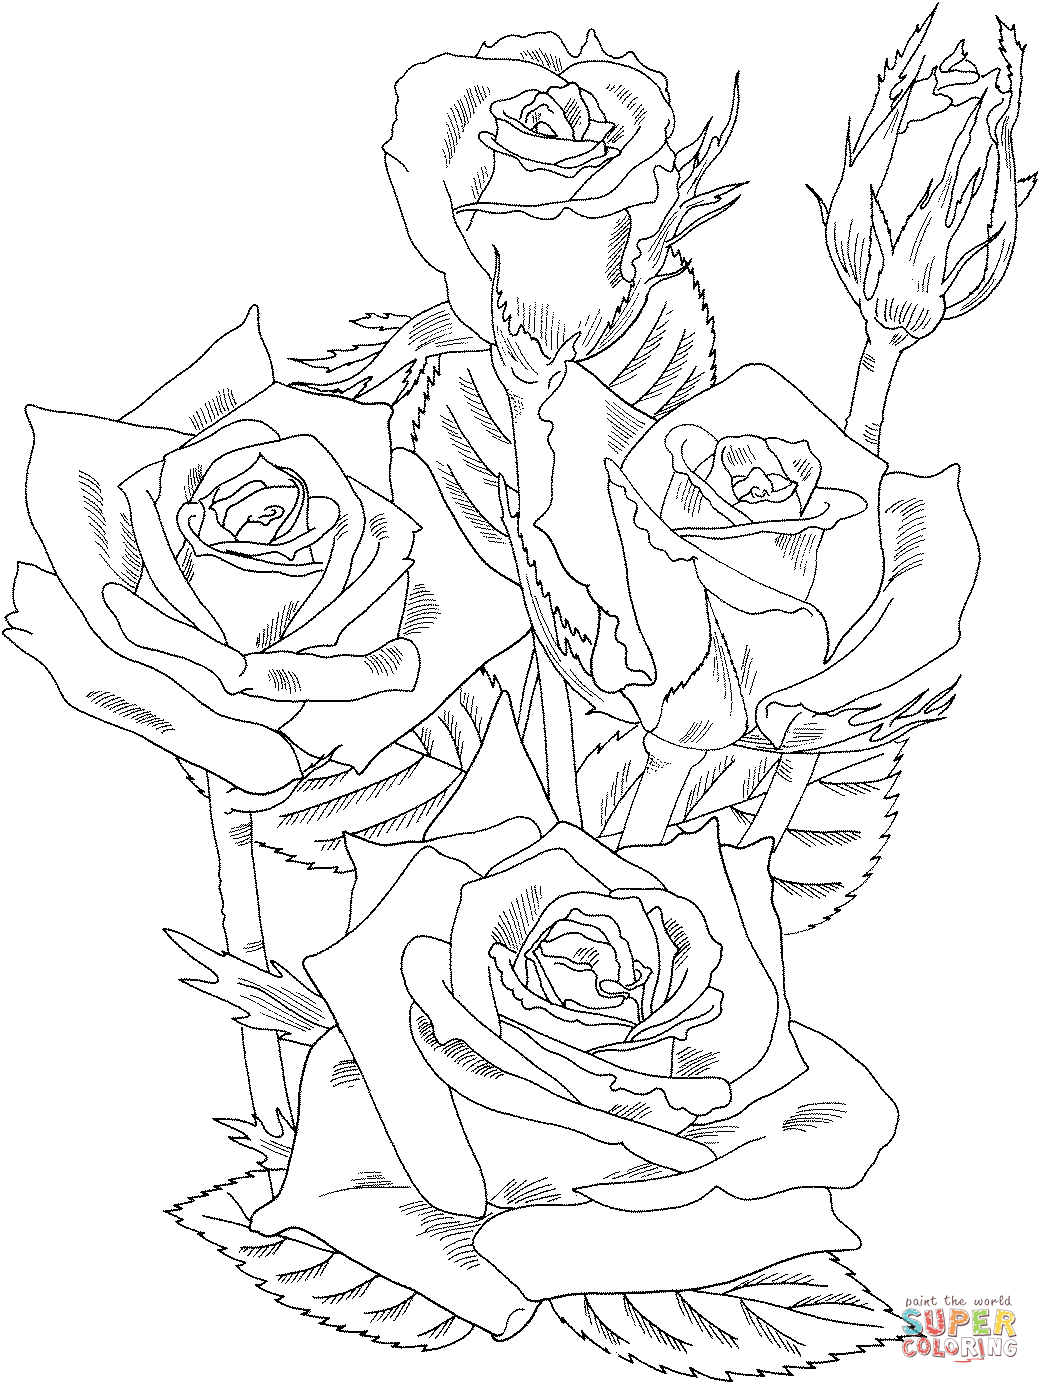 Rosiers buissons proéminents Grandiflora de roses